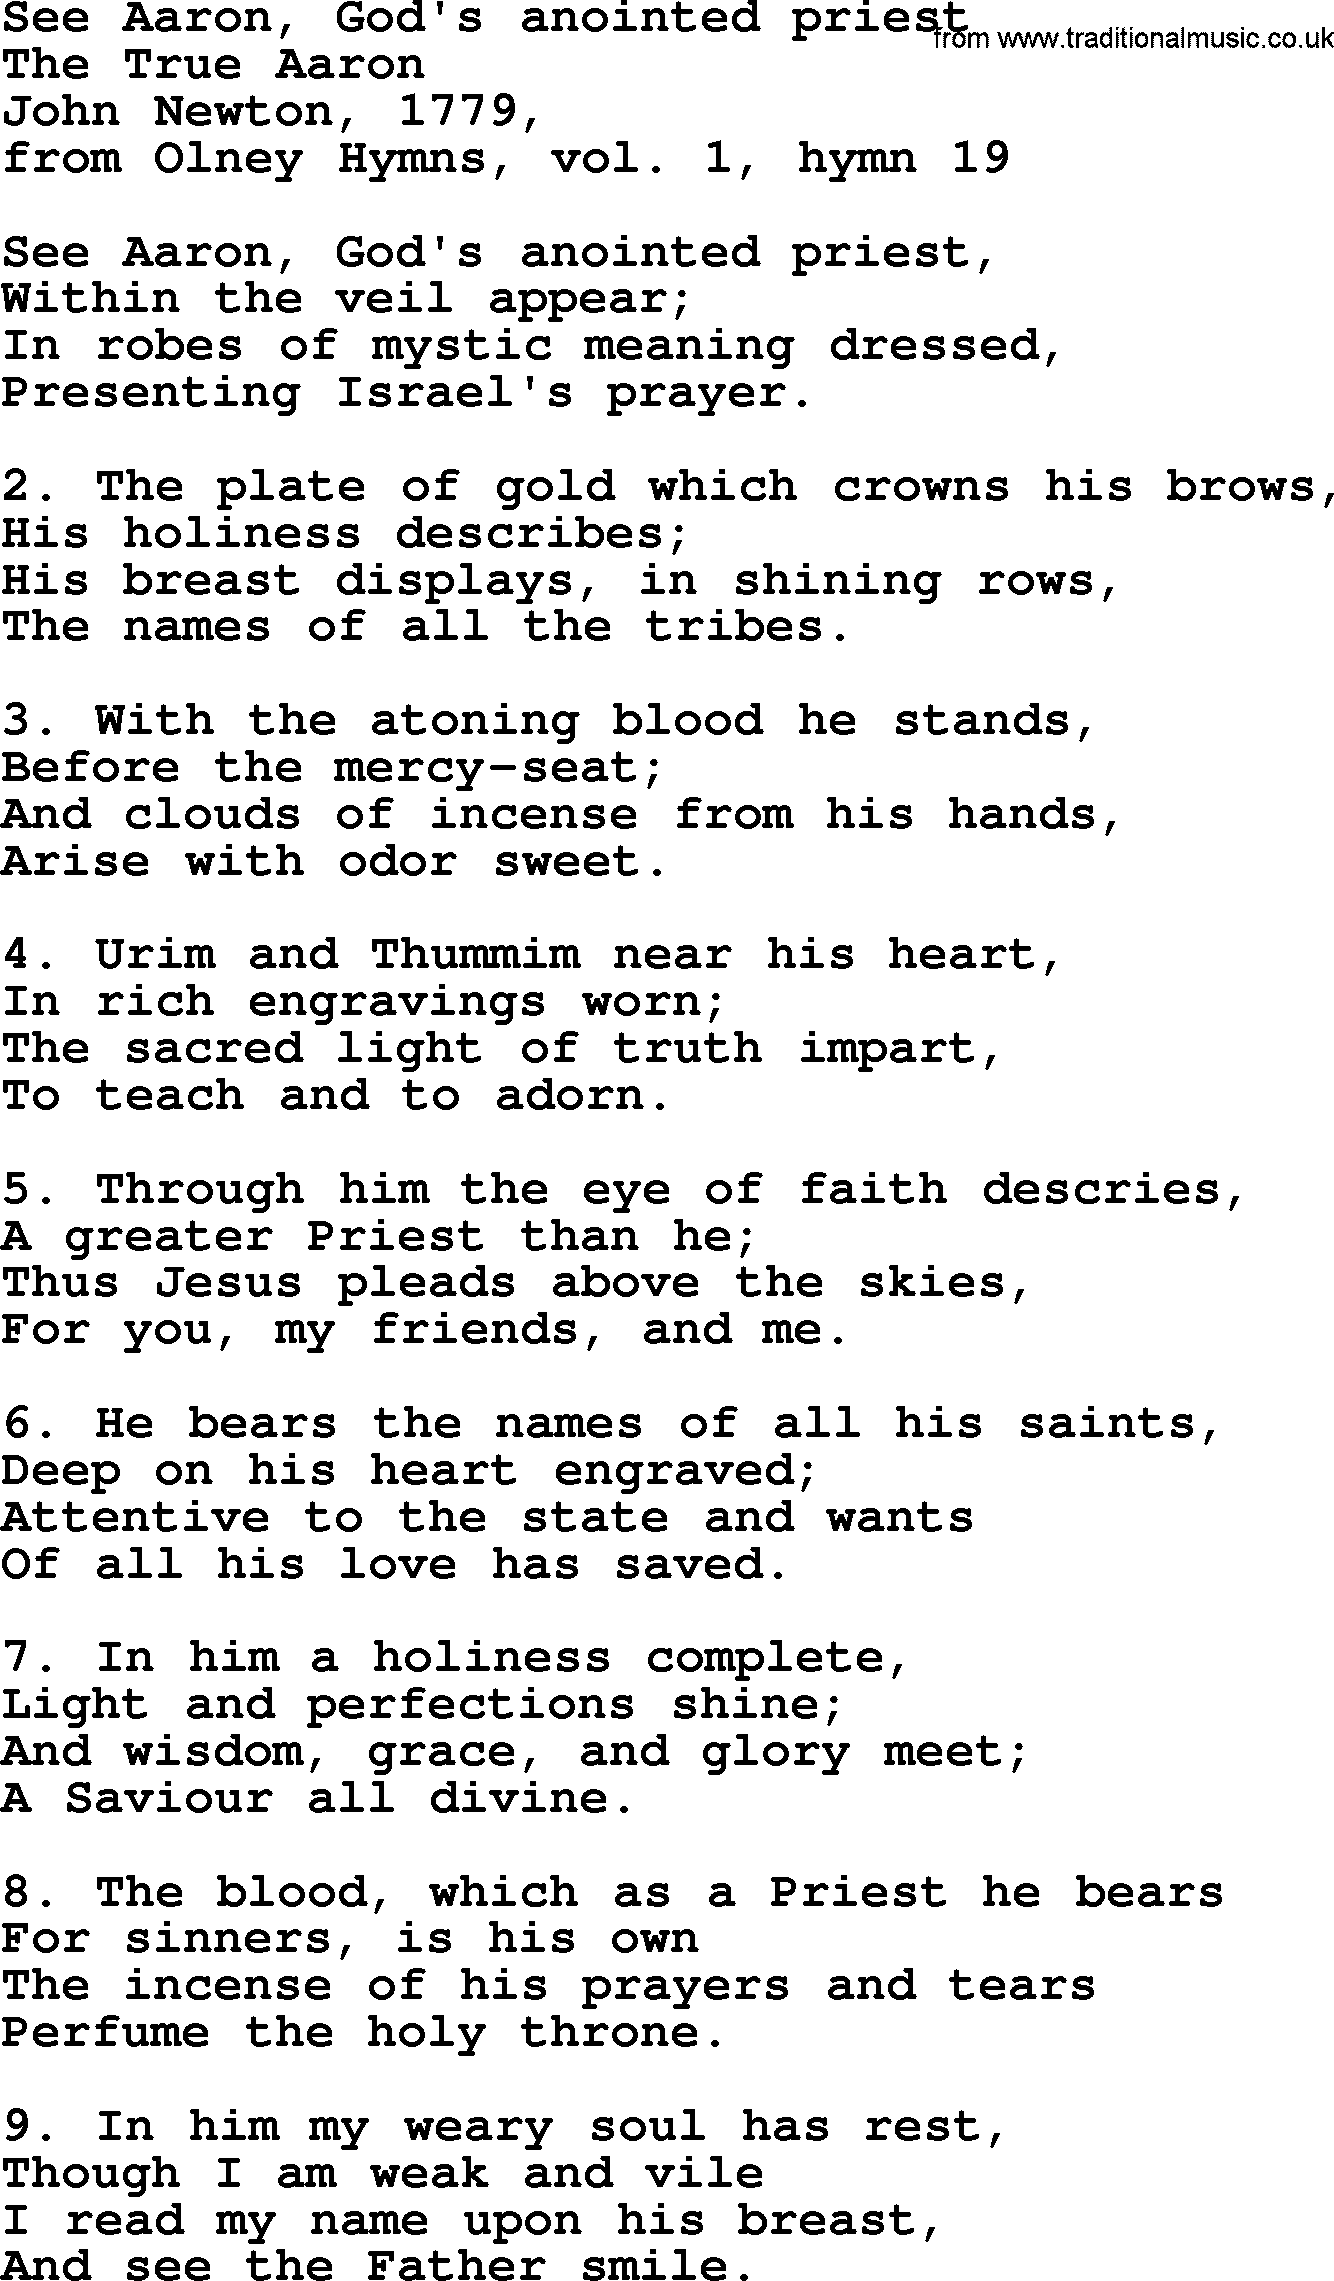 John Newton hymn: See Aaron, God's Anointed Priest, lyrics